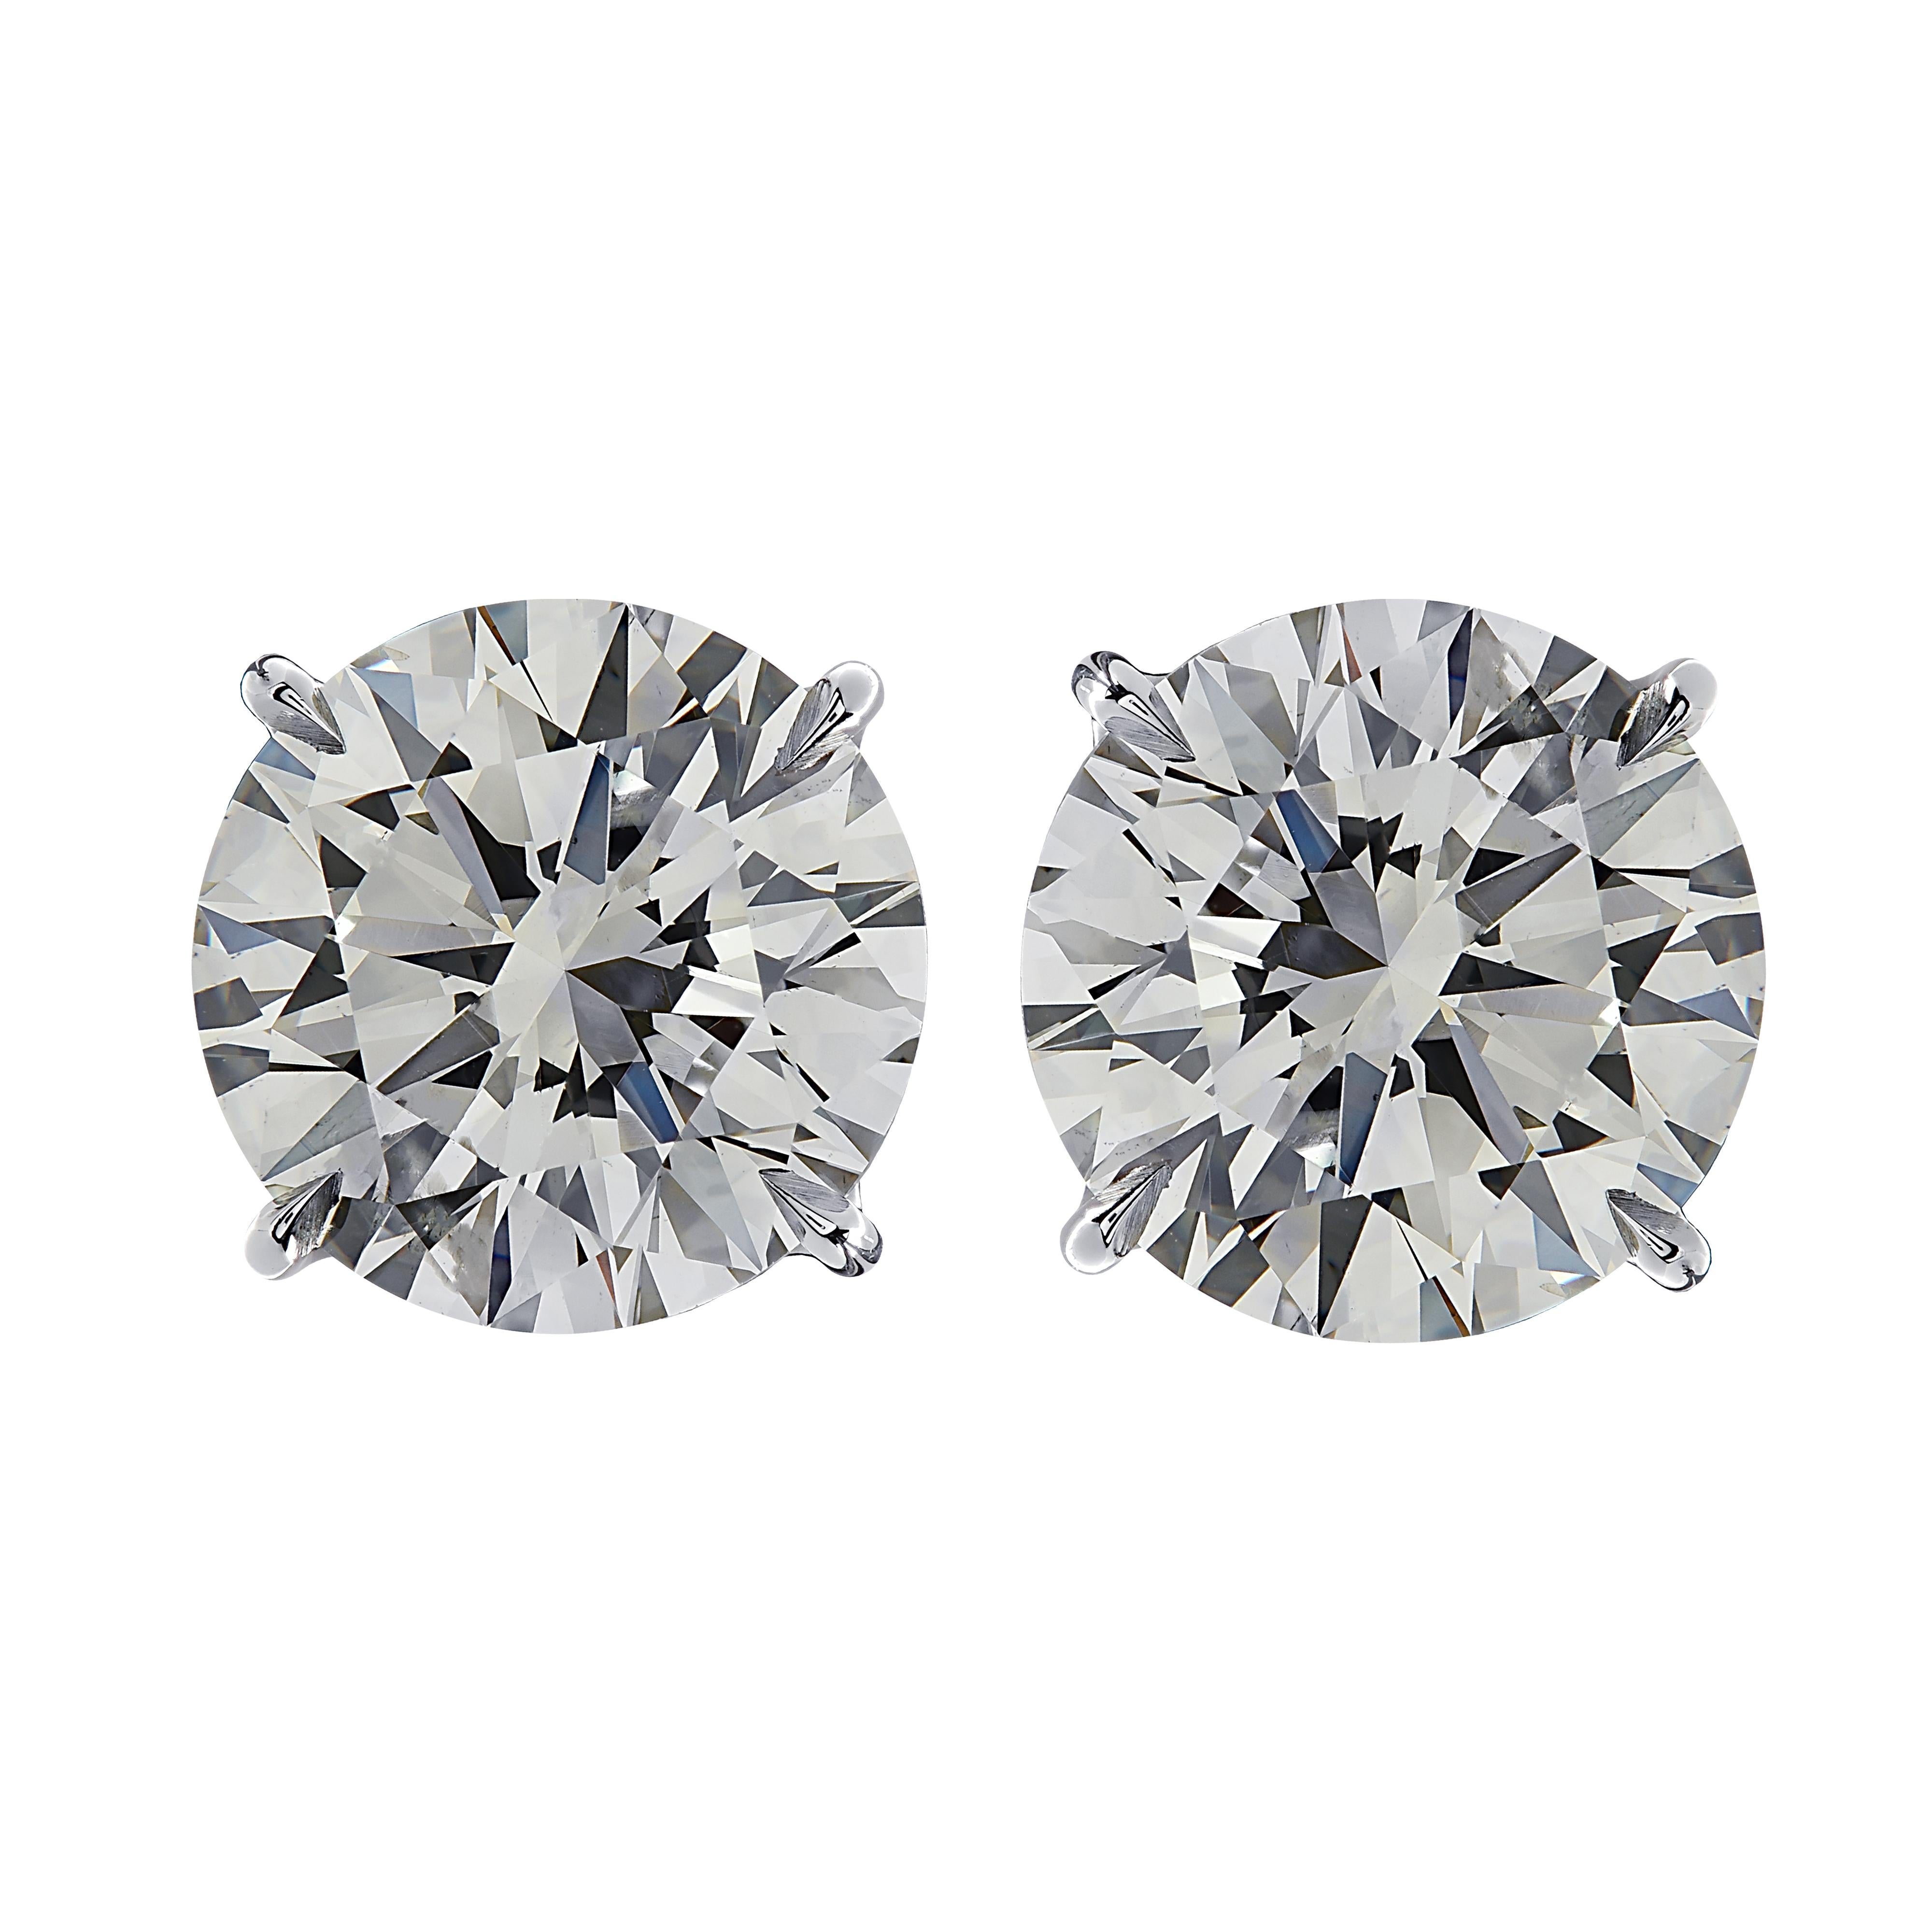 Women's or Men's Vivid Diamonds GIA Certified 6.01 Carat Diamond Solitaire Stud Earrings